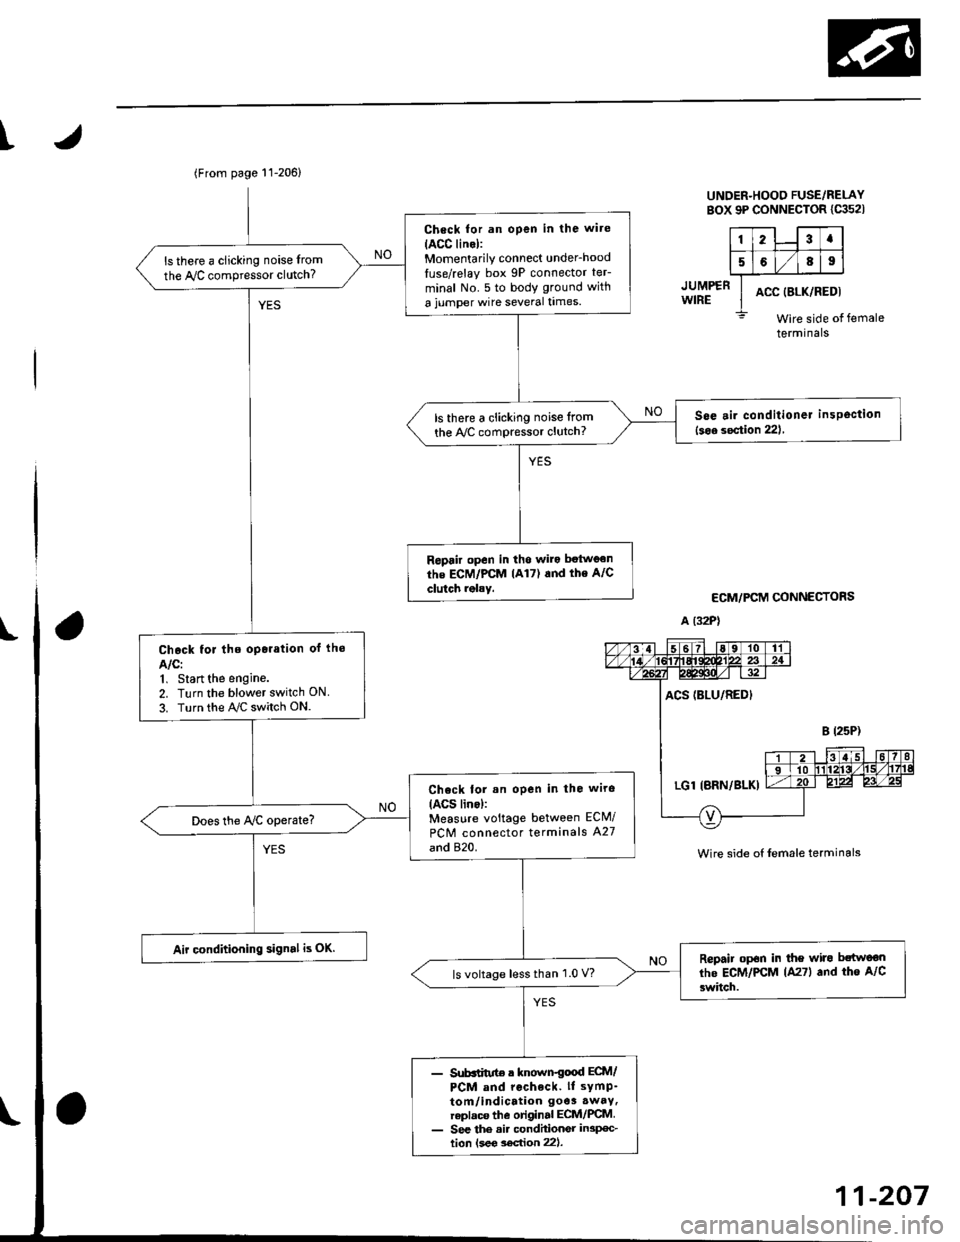 HONDA CIVIC 1996 6.G Workshop Manual I
JUMP€RWIRE
UNDER-HOOO FUSE/RELAYsox 9P coNNEcroR lca52l
123a
5689
ACC (8LK/REDI
Wire side ofterminals
ECM/PCM CONNECTORS
A (32P1
female
Wire side of {emale terminals
(From page 11-206)
Check for a